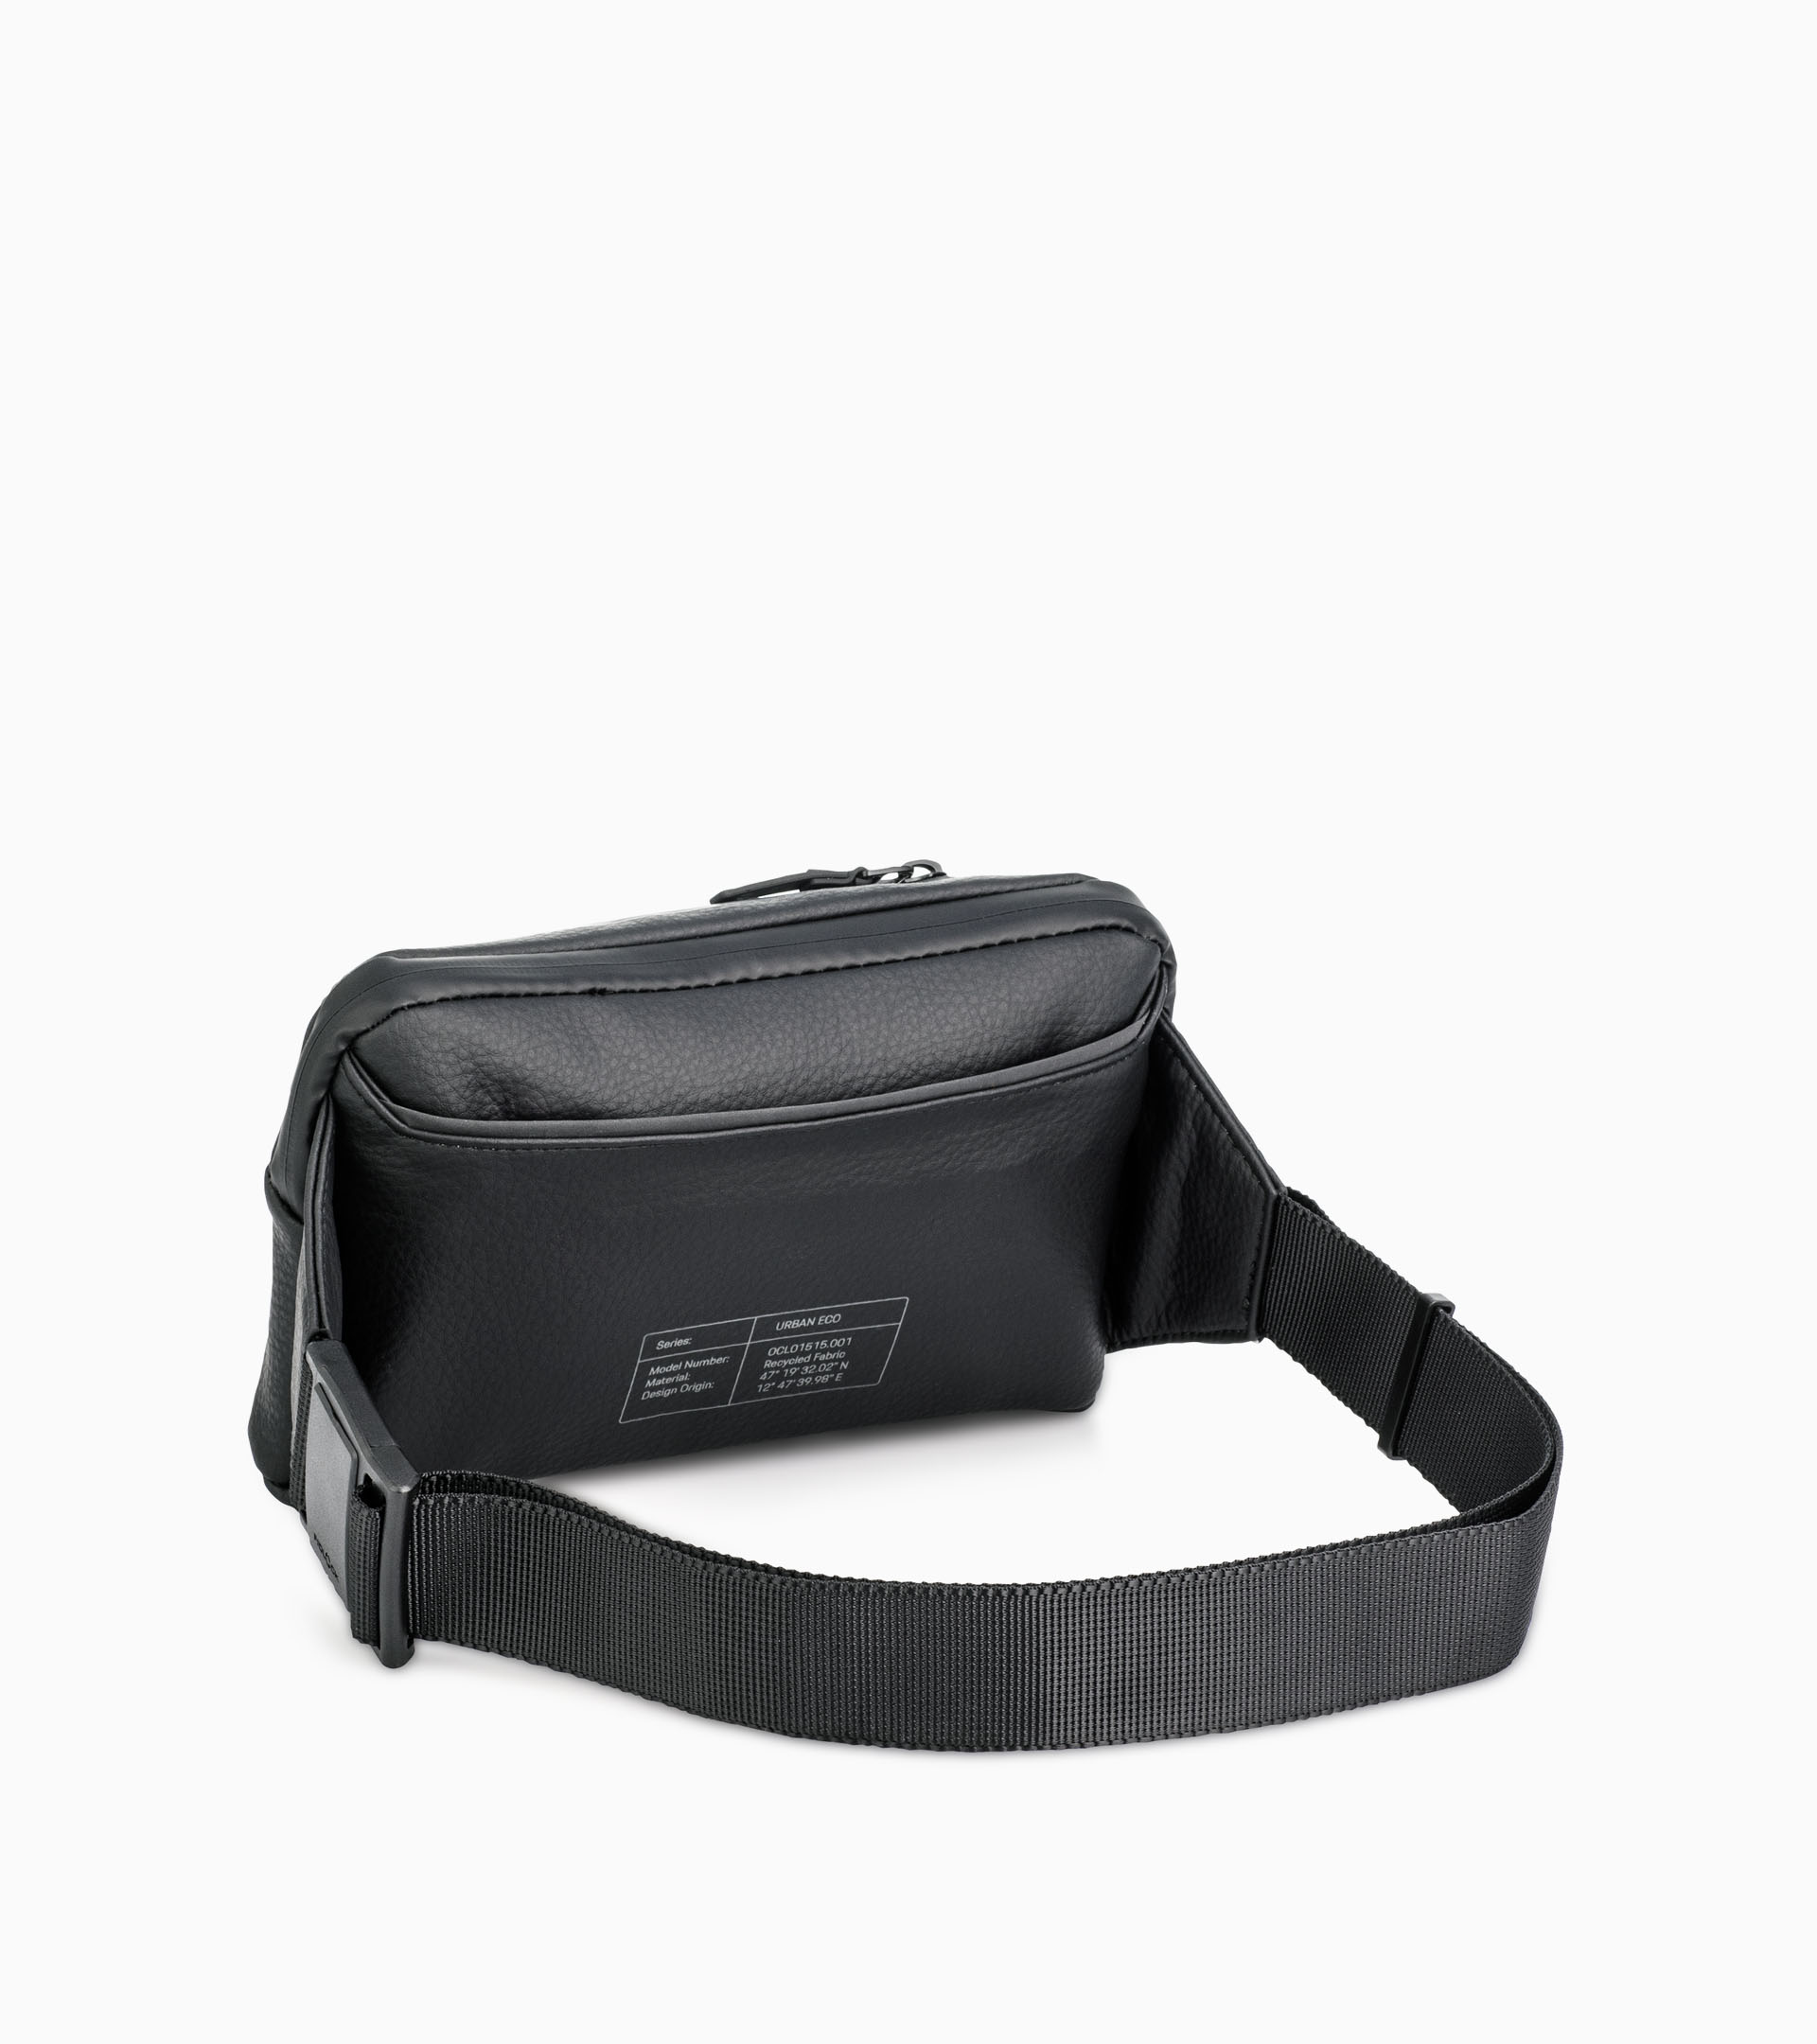 Urban Eco RL Belt Bag Practical & Porsche Porsche Design Men\'s Bag Shoulder - black | - Comfortable Design 